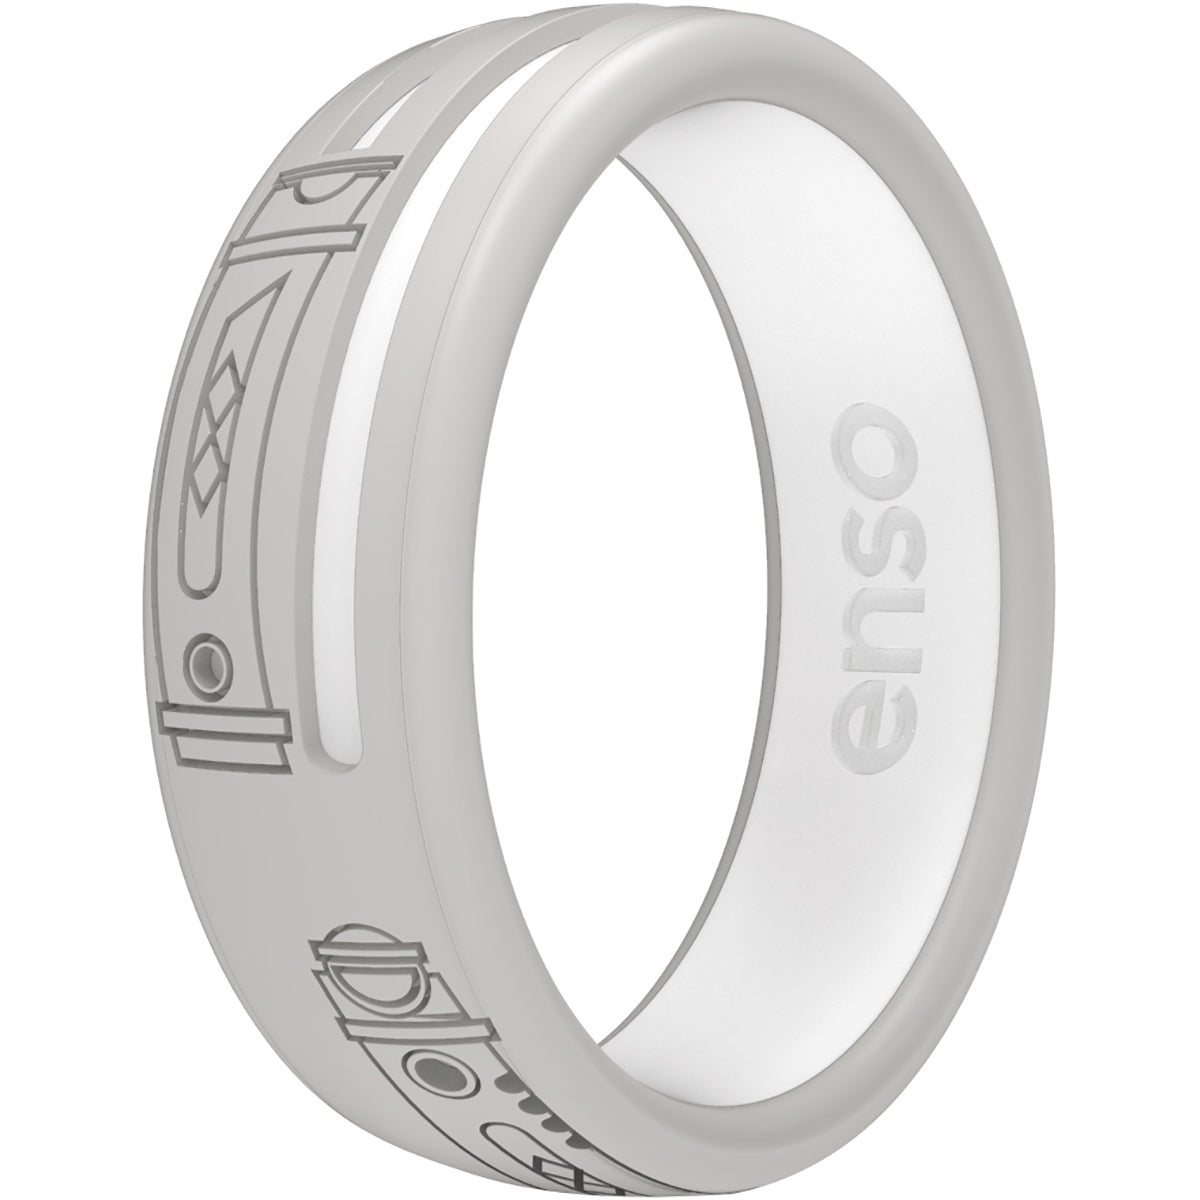 Enso Rings Star Wars Ahsoka Tano Lightsaber Classic Silicone Ring - Gray/White Enso Rings